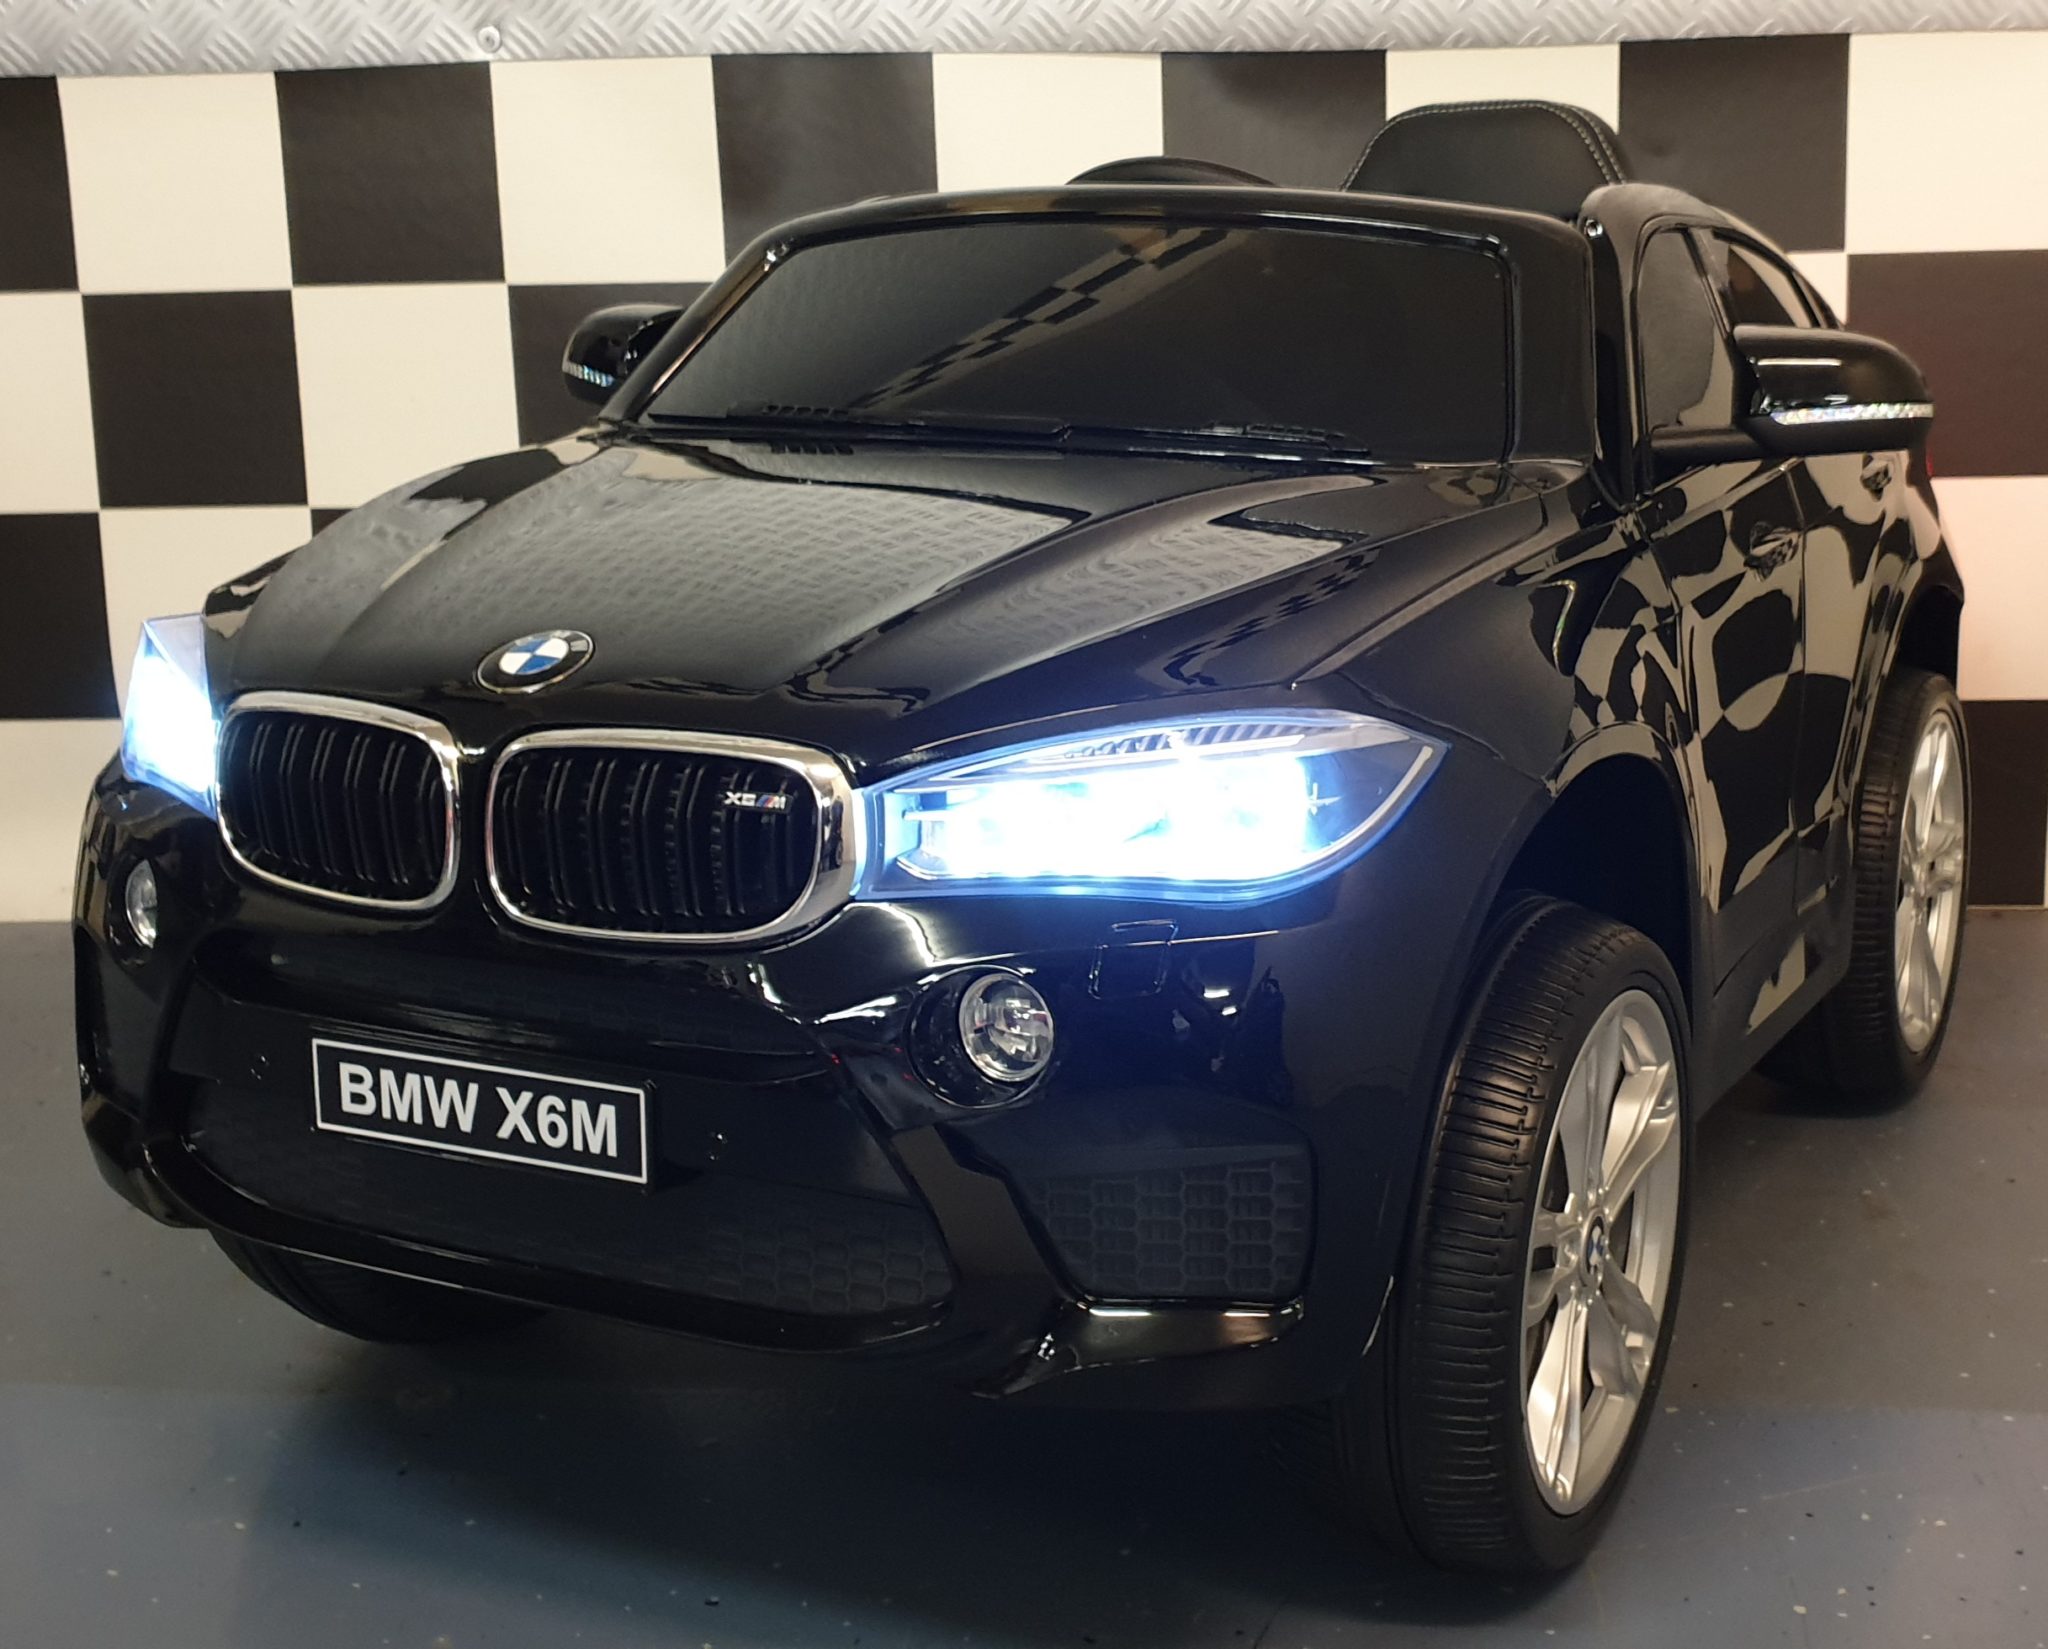 vleet Stapel heerser BMW X6 M | ZWART | 12V | 2.4G RC - Kids-Accu Cars